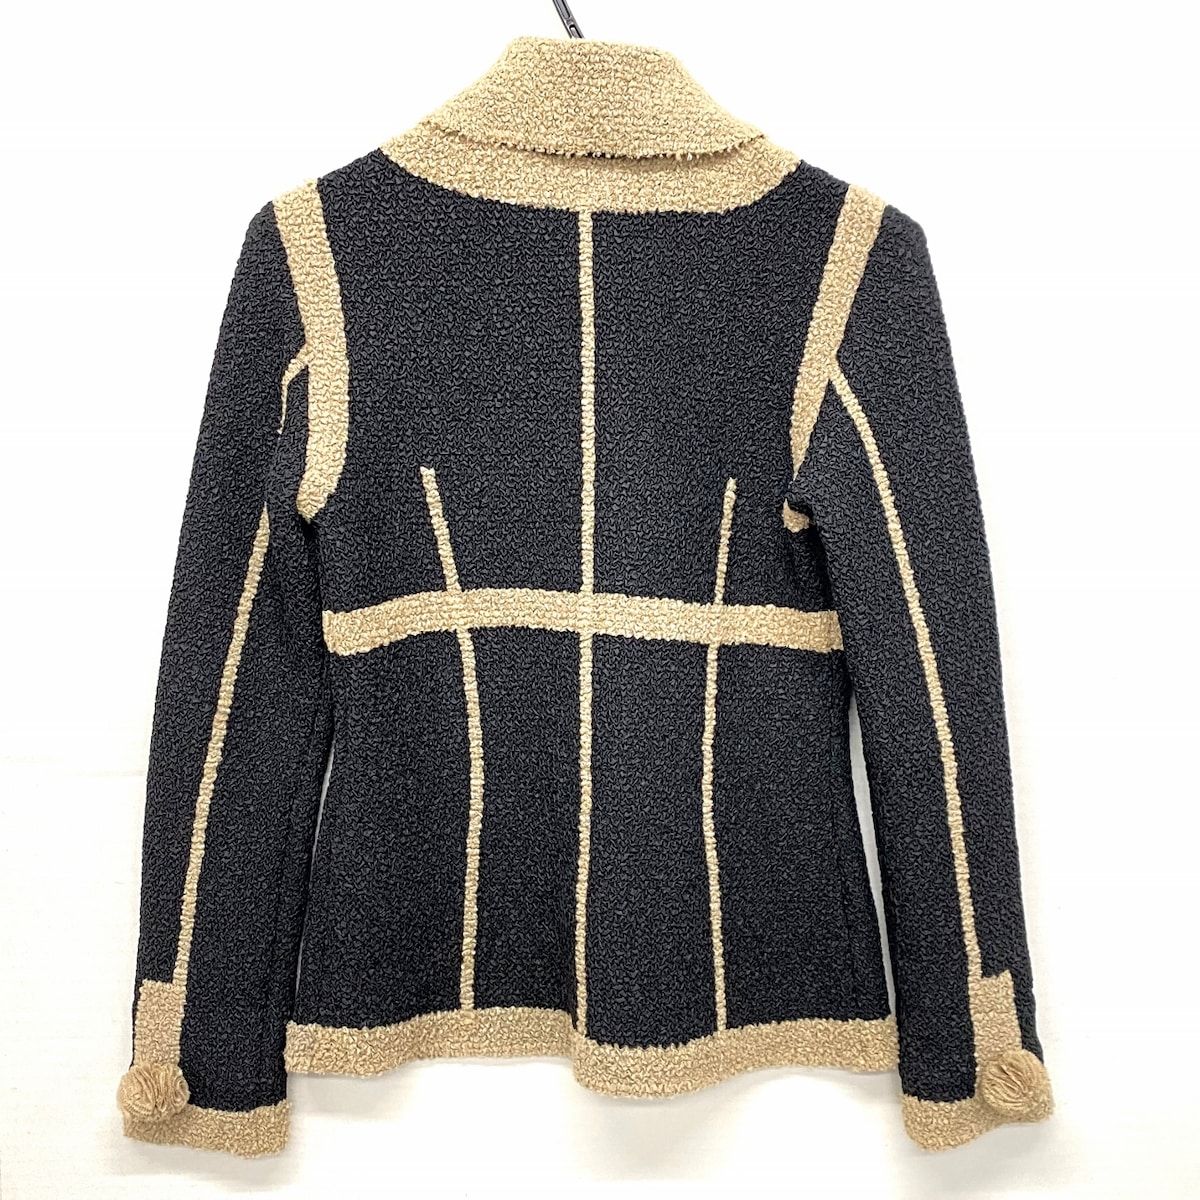 NOKO OHNO(ノコオーノ) ジャケット サイズ38 M レディース美品 - 黒×ベージュ 長袖/フラワー